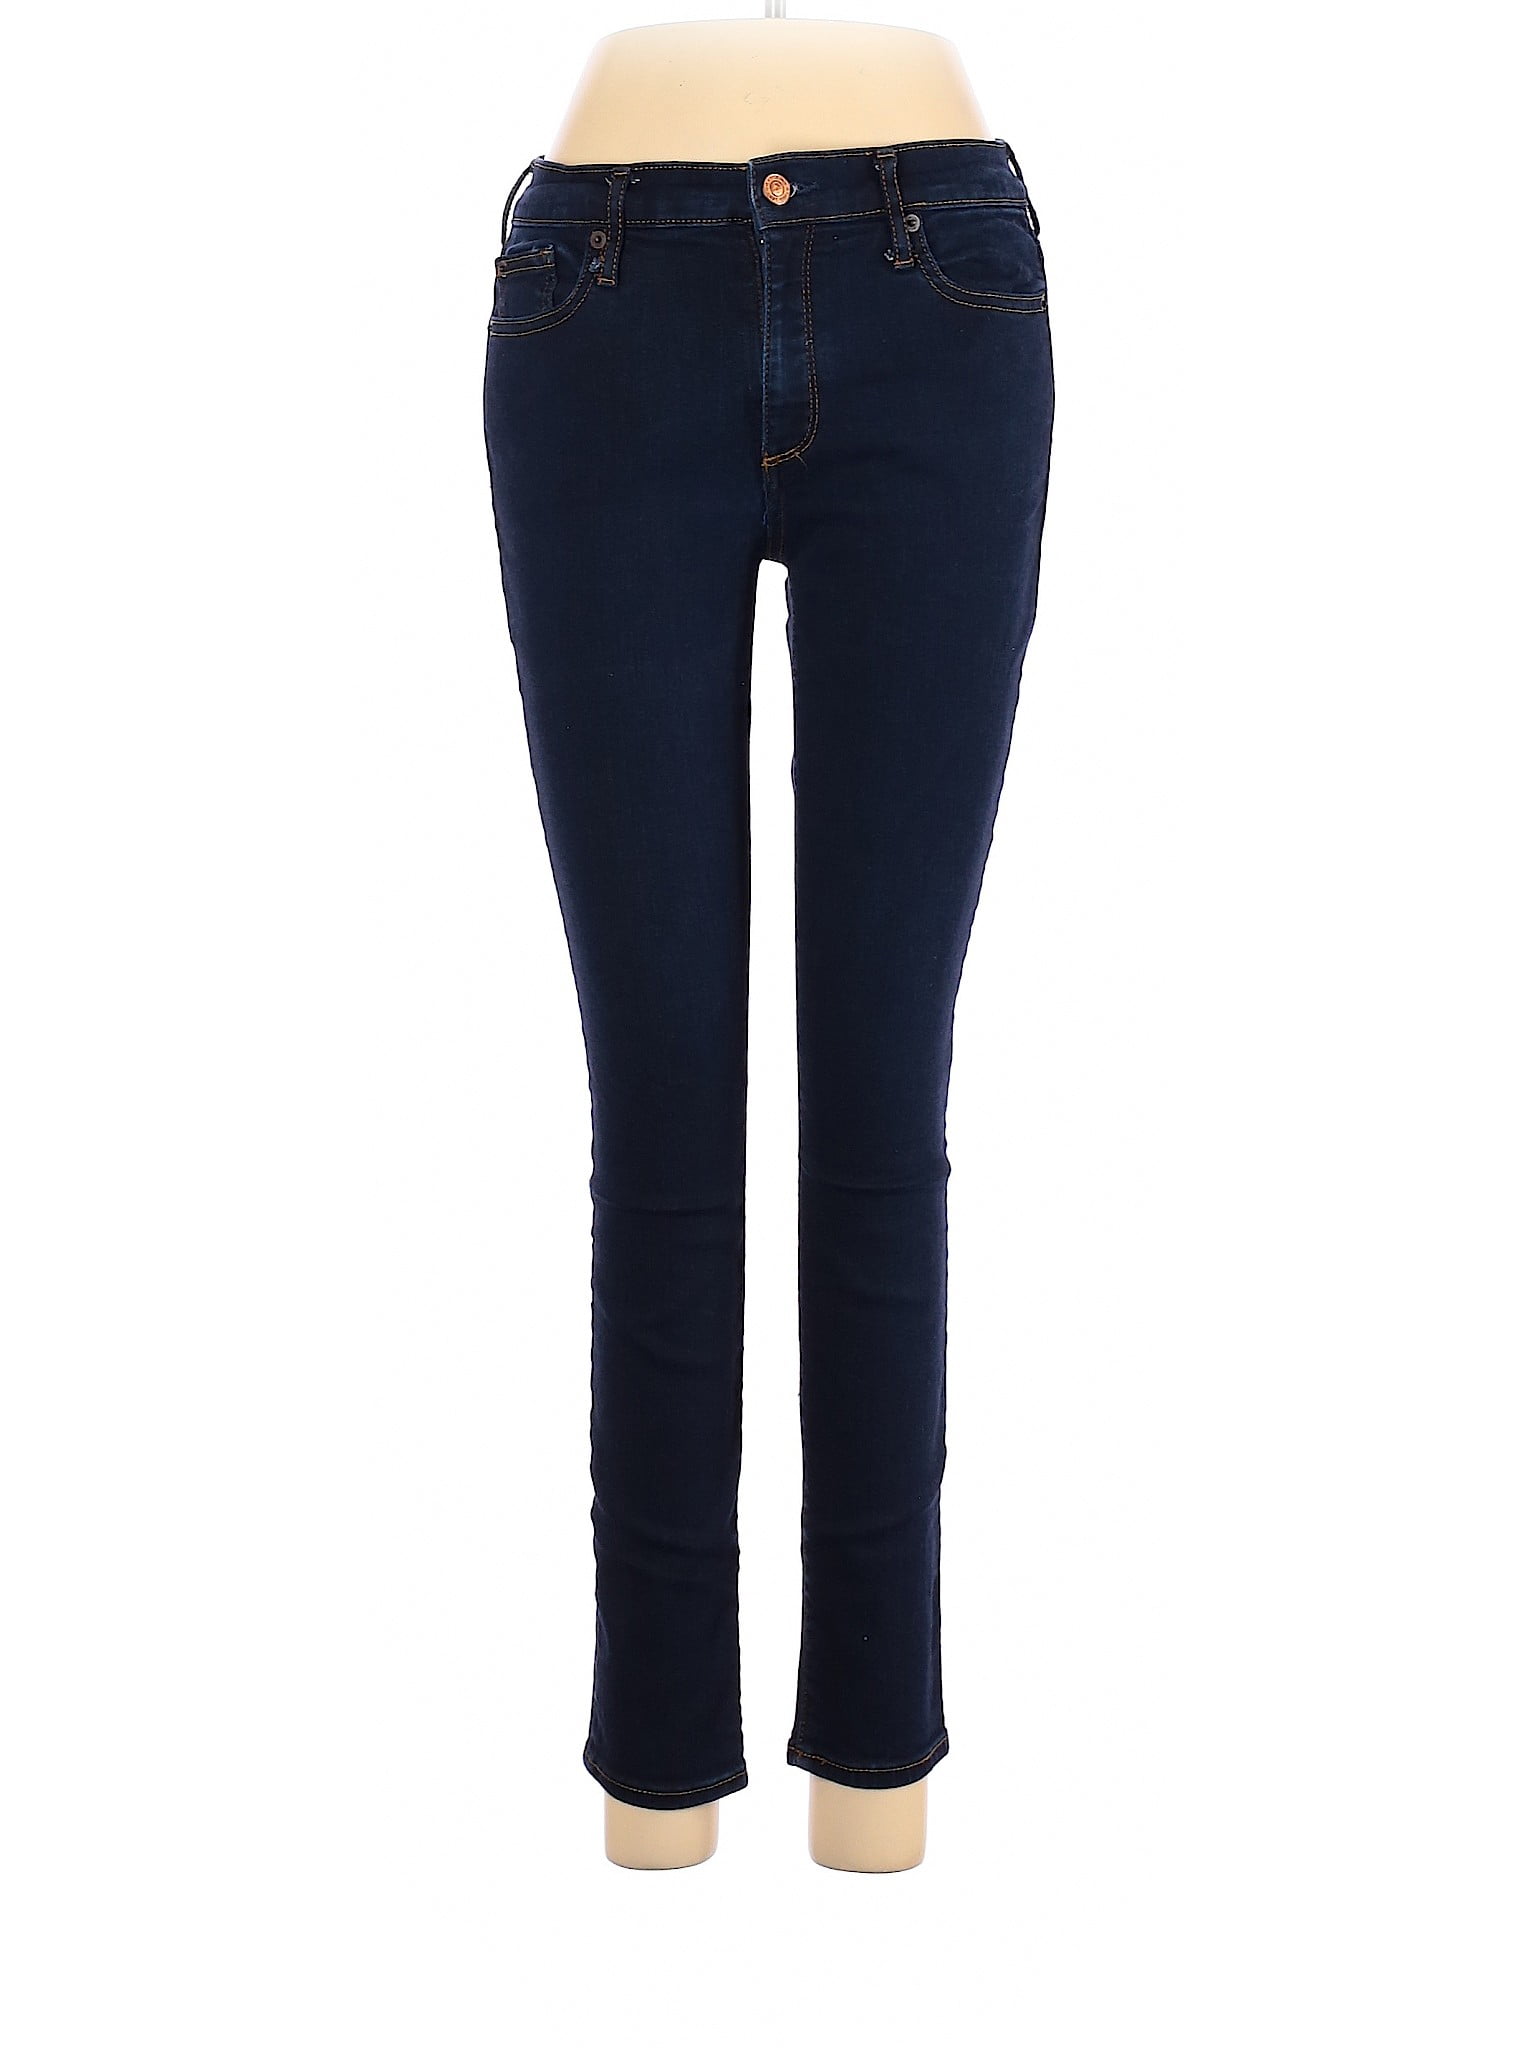 gap jeans size 28